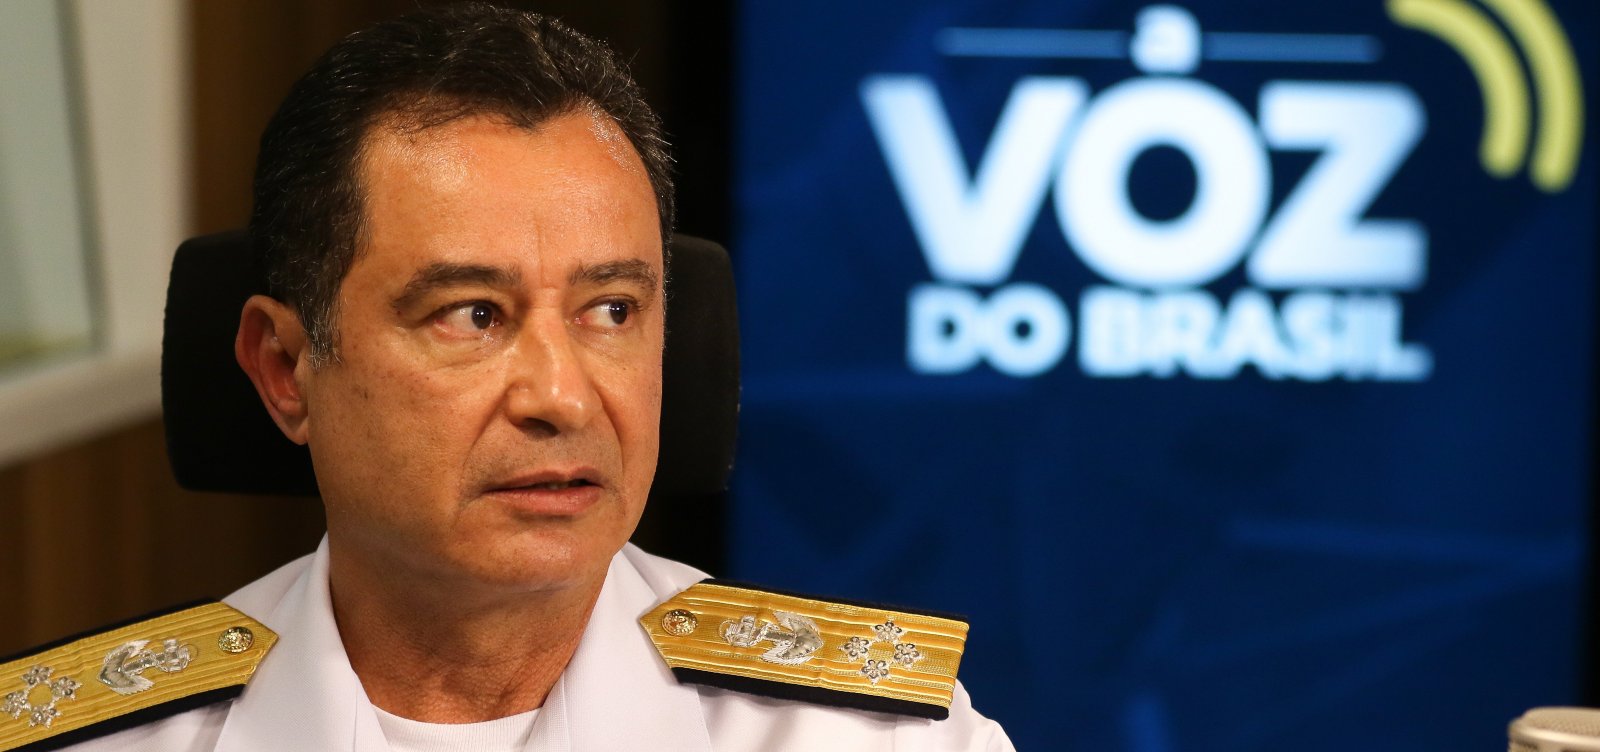 Oficiais acreditam que almirante Garnier será punido após apoiar tentativa de golpe